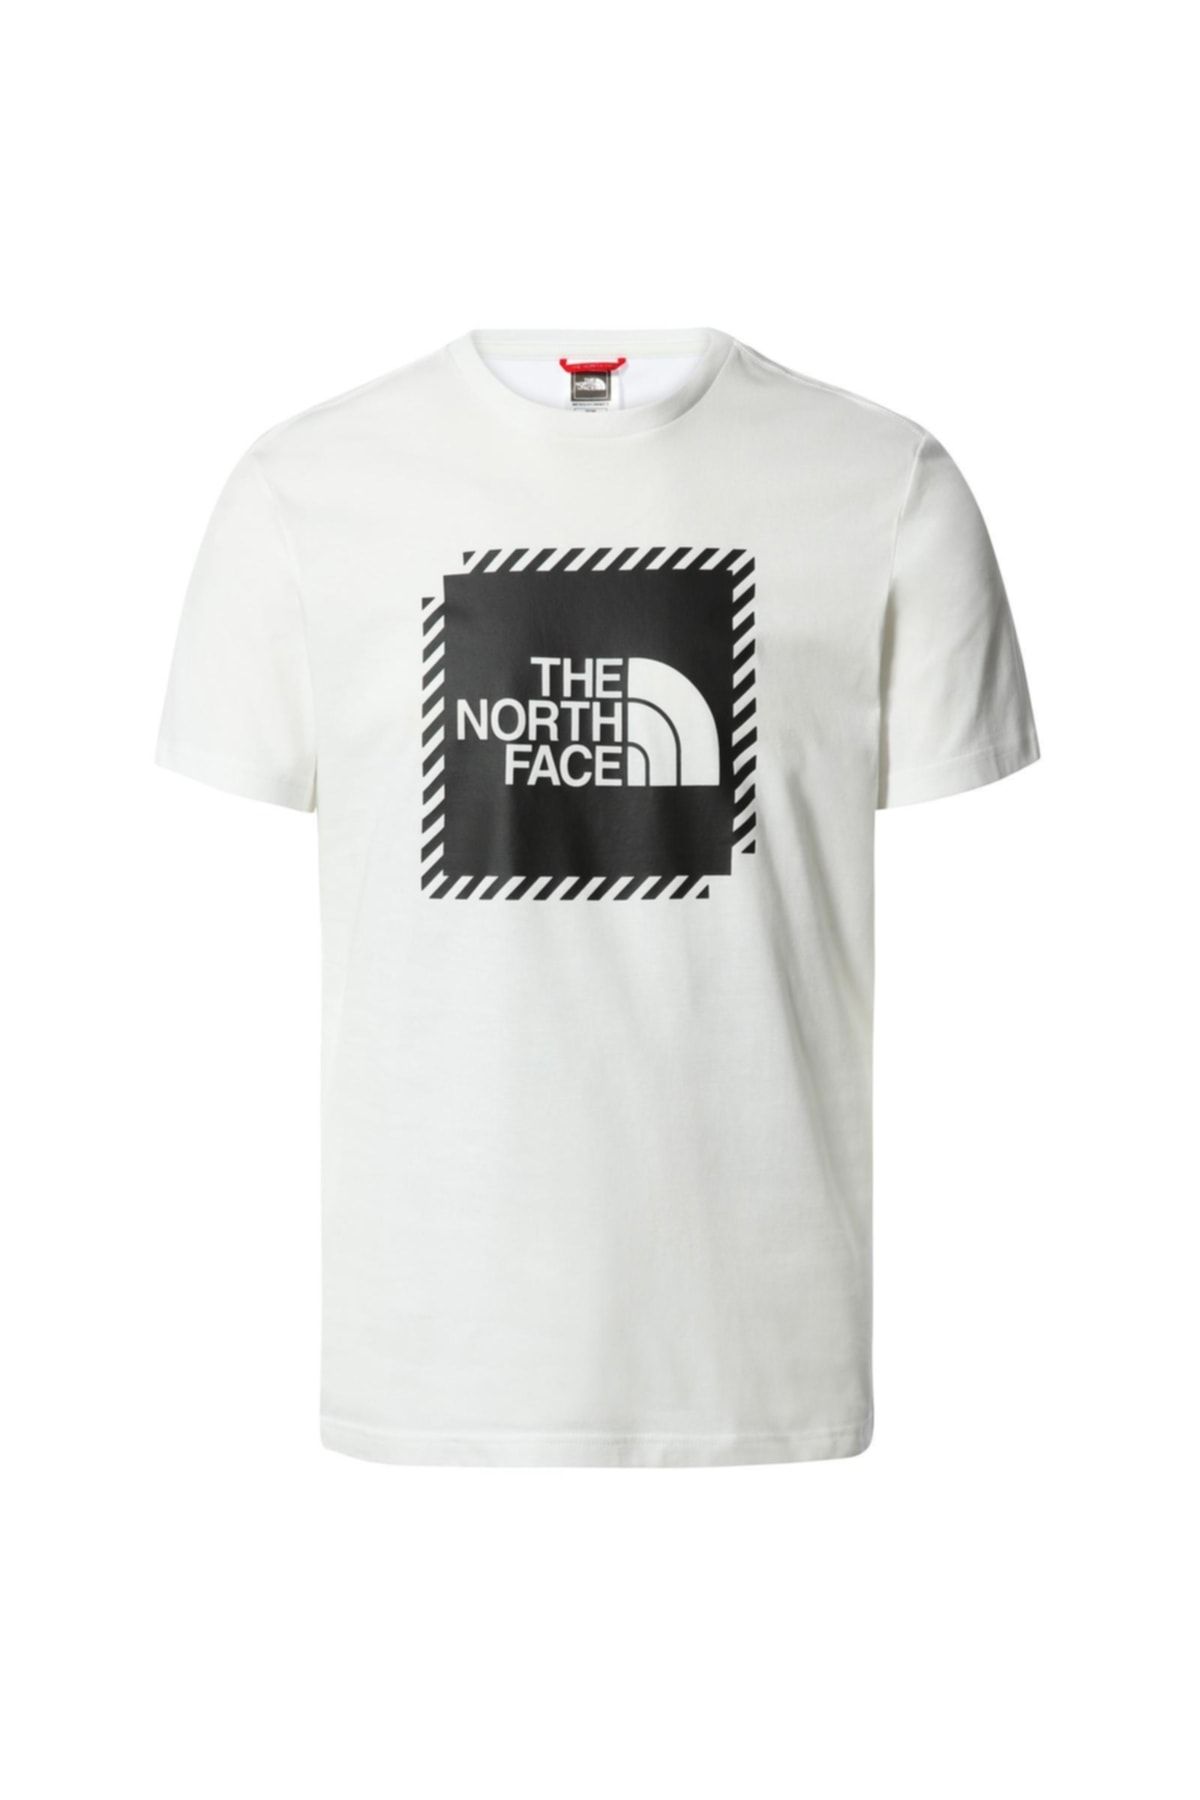 The North Face Biner Graphic 2 Tee Erkek T-shirt